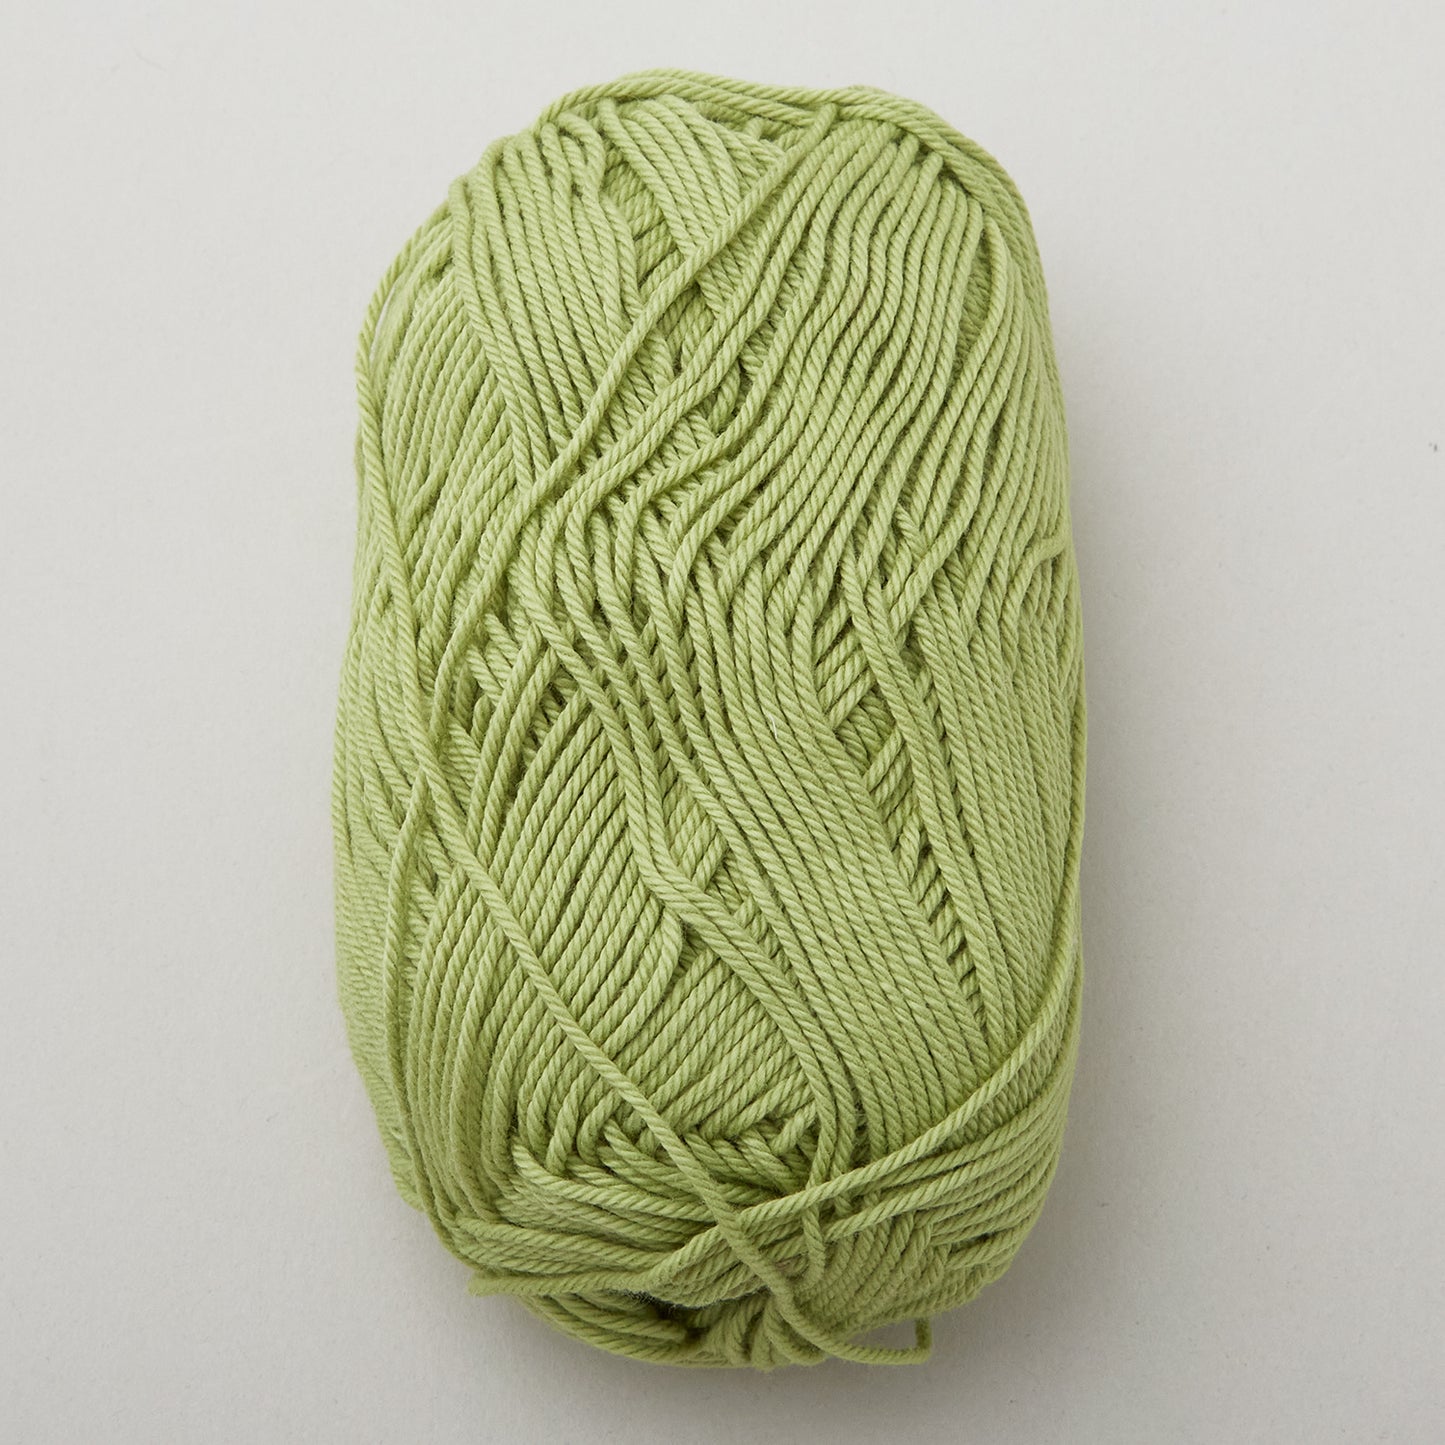 Lori Holt Chunky Crochet Thread Thyme (32996) Alternative View #1